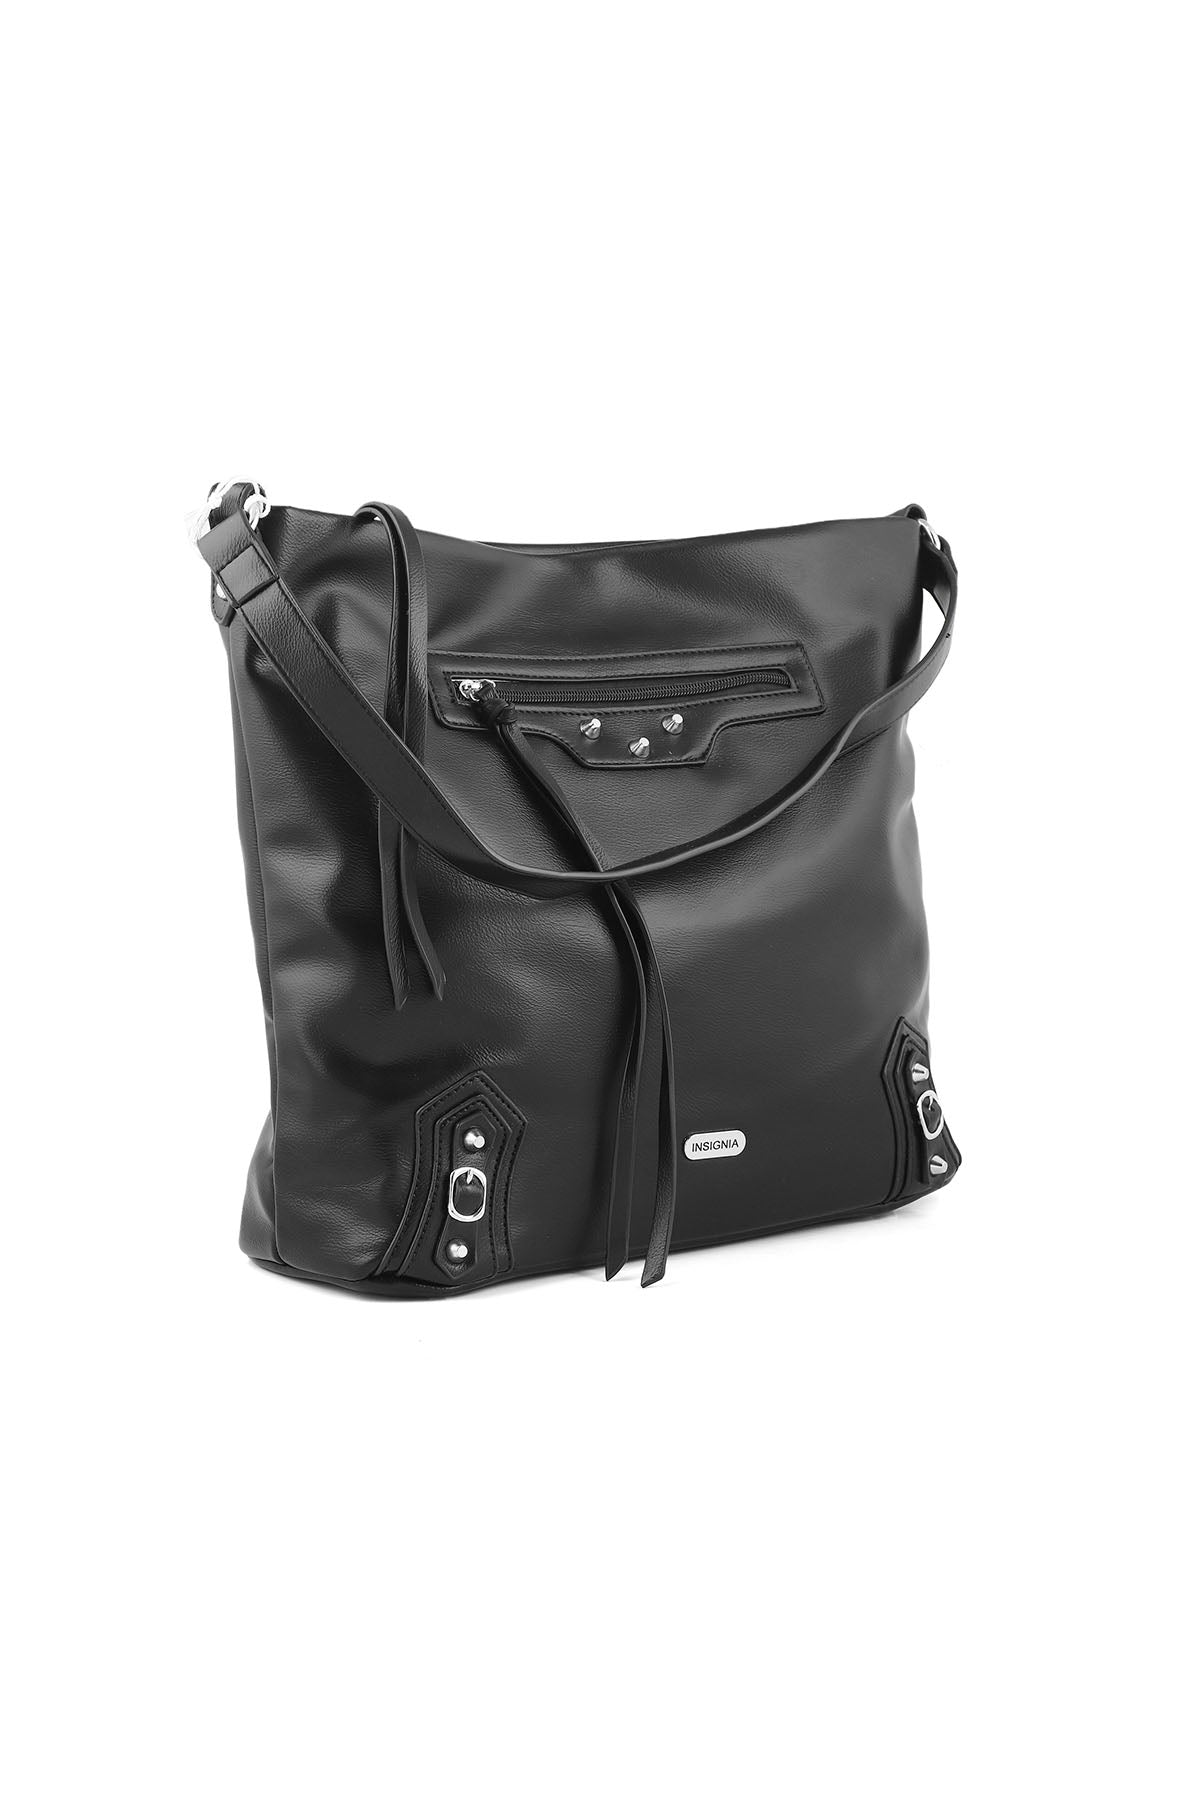 Hobo Hand Bags B15135-Black